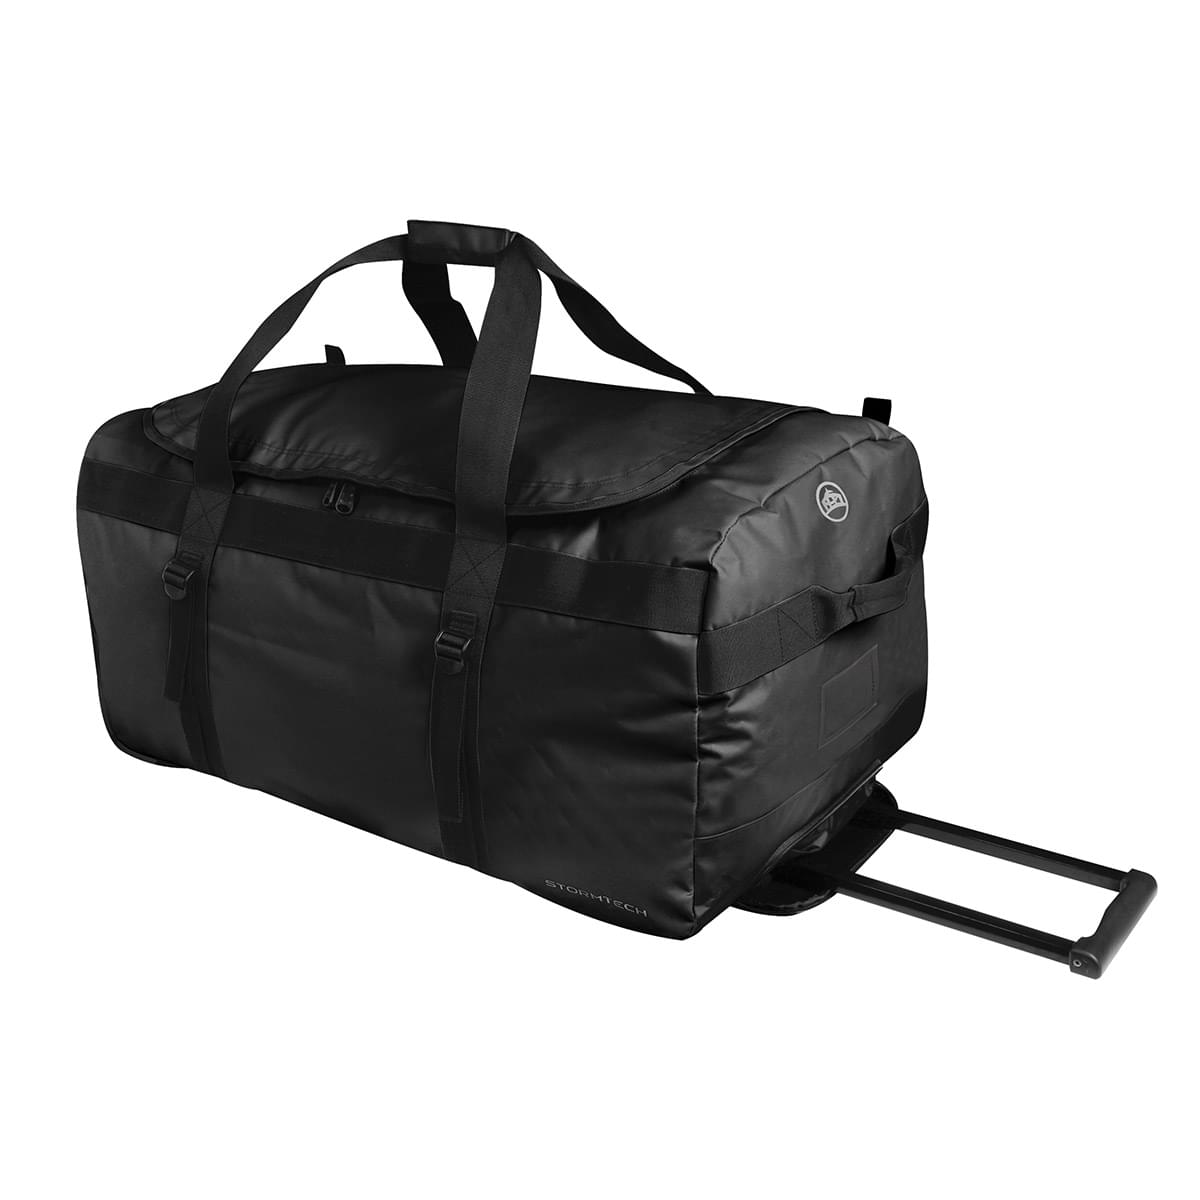 Waterproof Wheeled Duffel Bag, Travel Bag